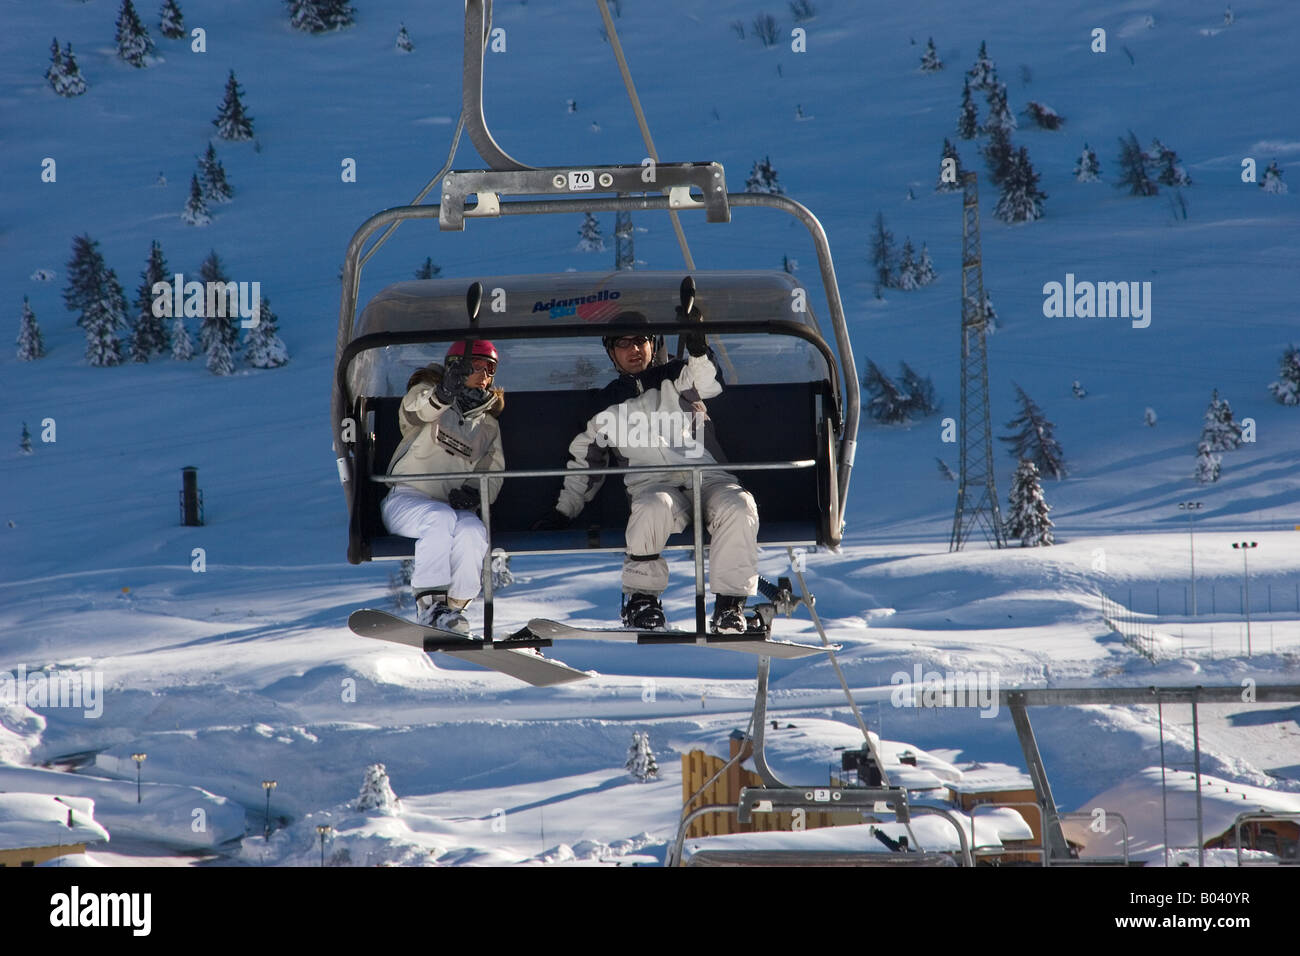 Snowboarders on a ski lift Stock Photo